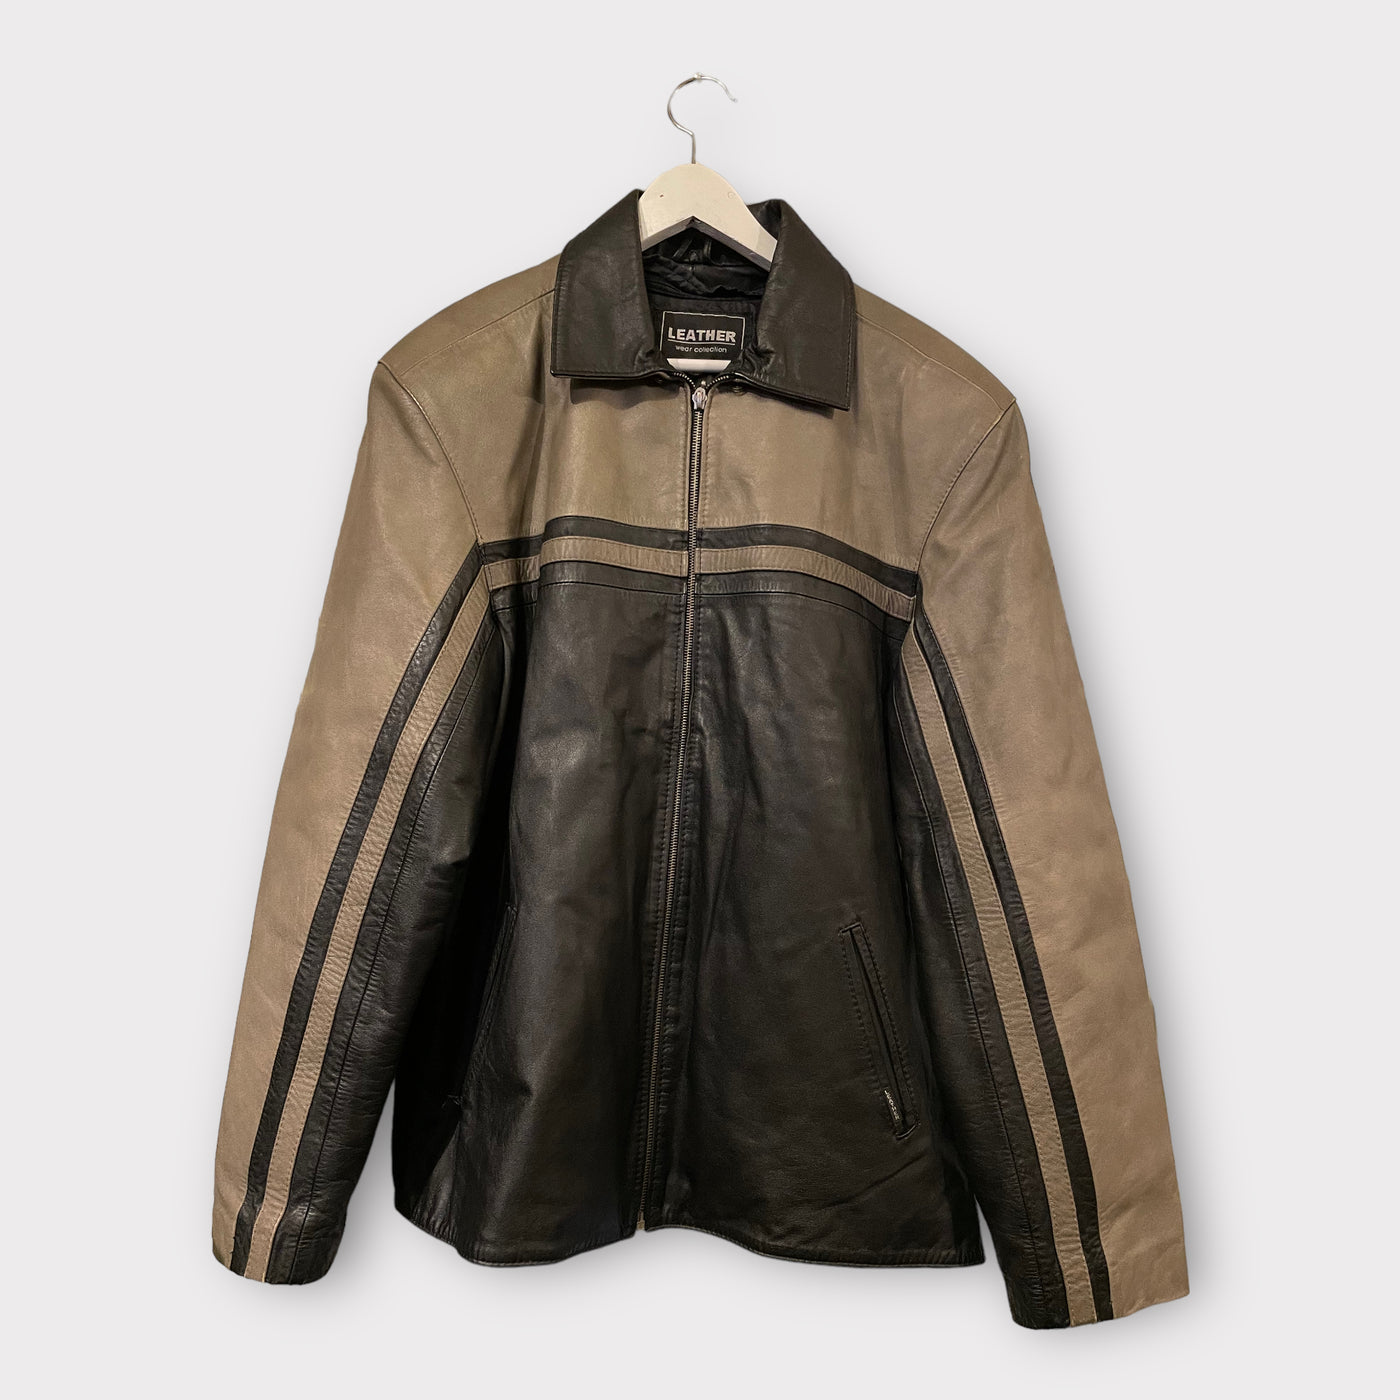 Brown leather jacket motocross design